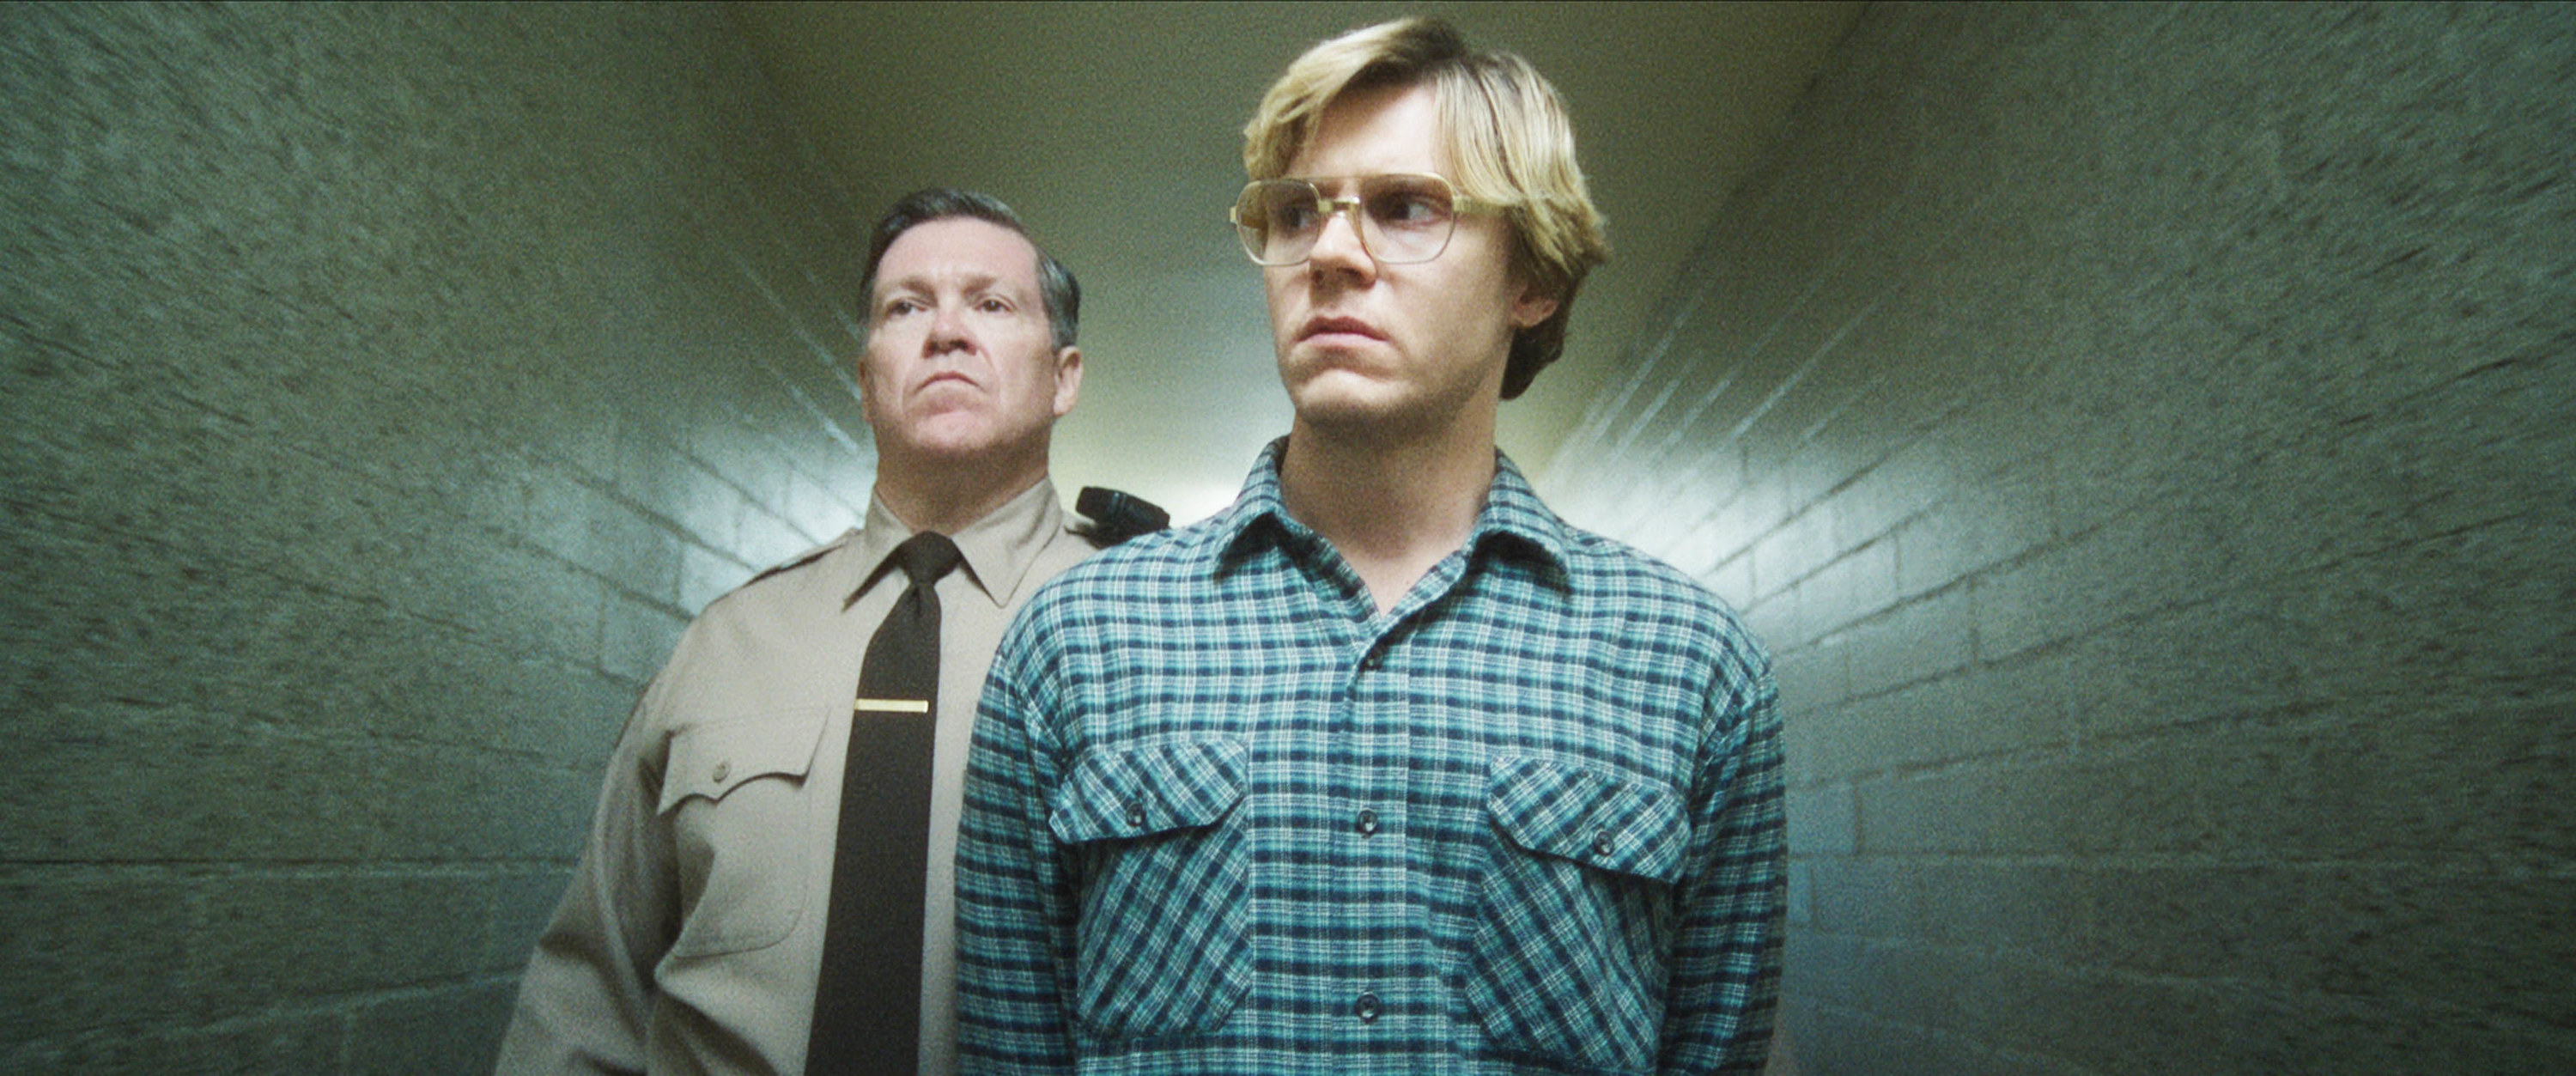 Jeffrey Dahmer Netflix Series - Is it Glorifying Serial Killers? - Stay at  Home Mum